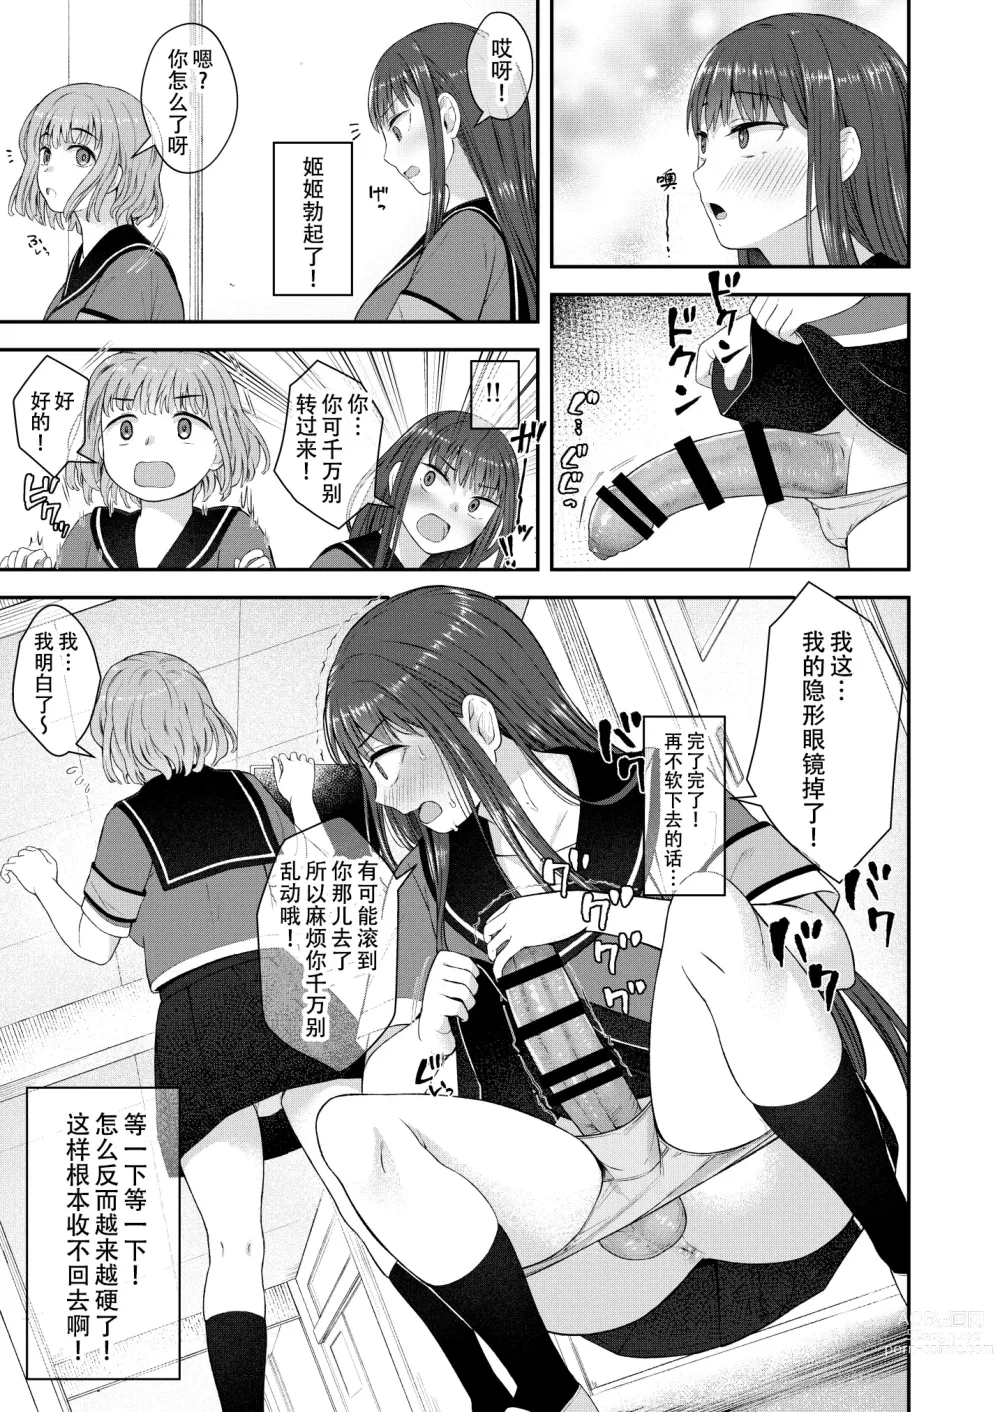 Page 9 of doujinshi 放课后的自拍少女2 那个露出男性性器并且自拍的变态只有她知道其真面目.